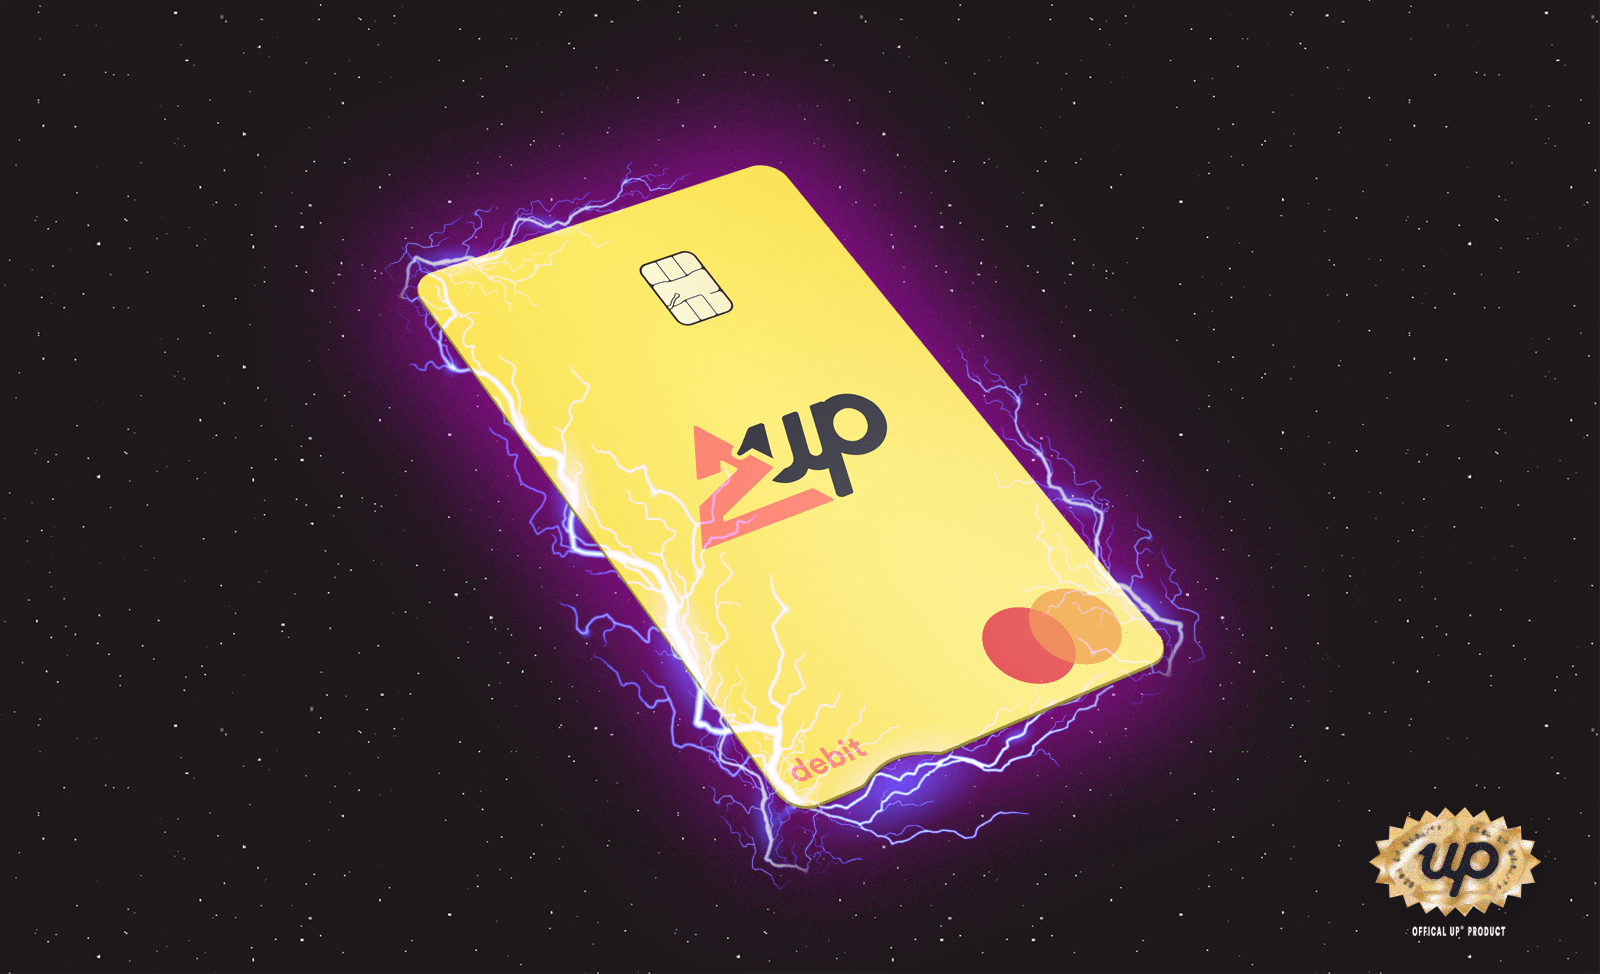 2Up Plastic Card